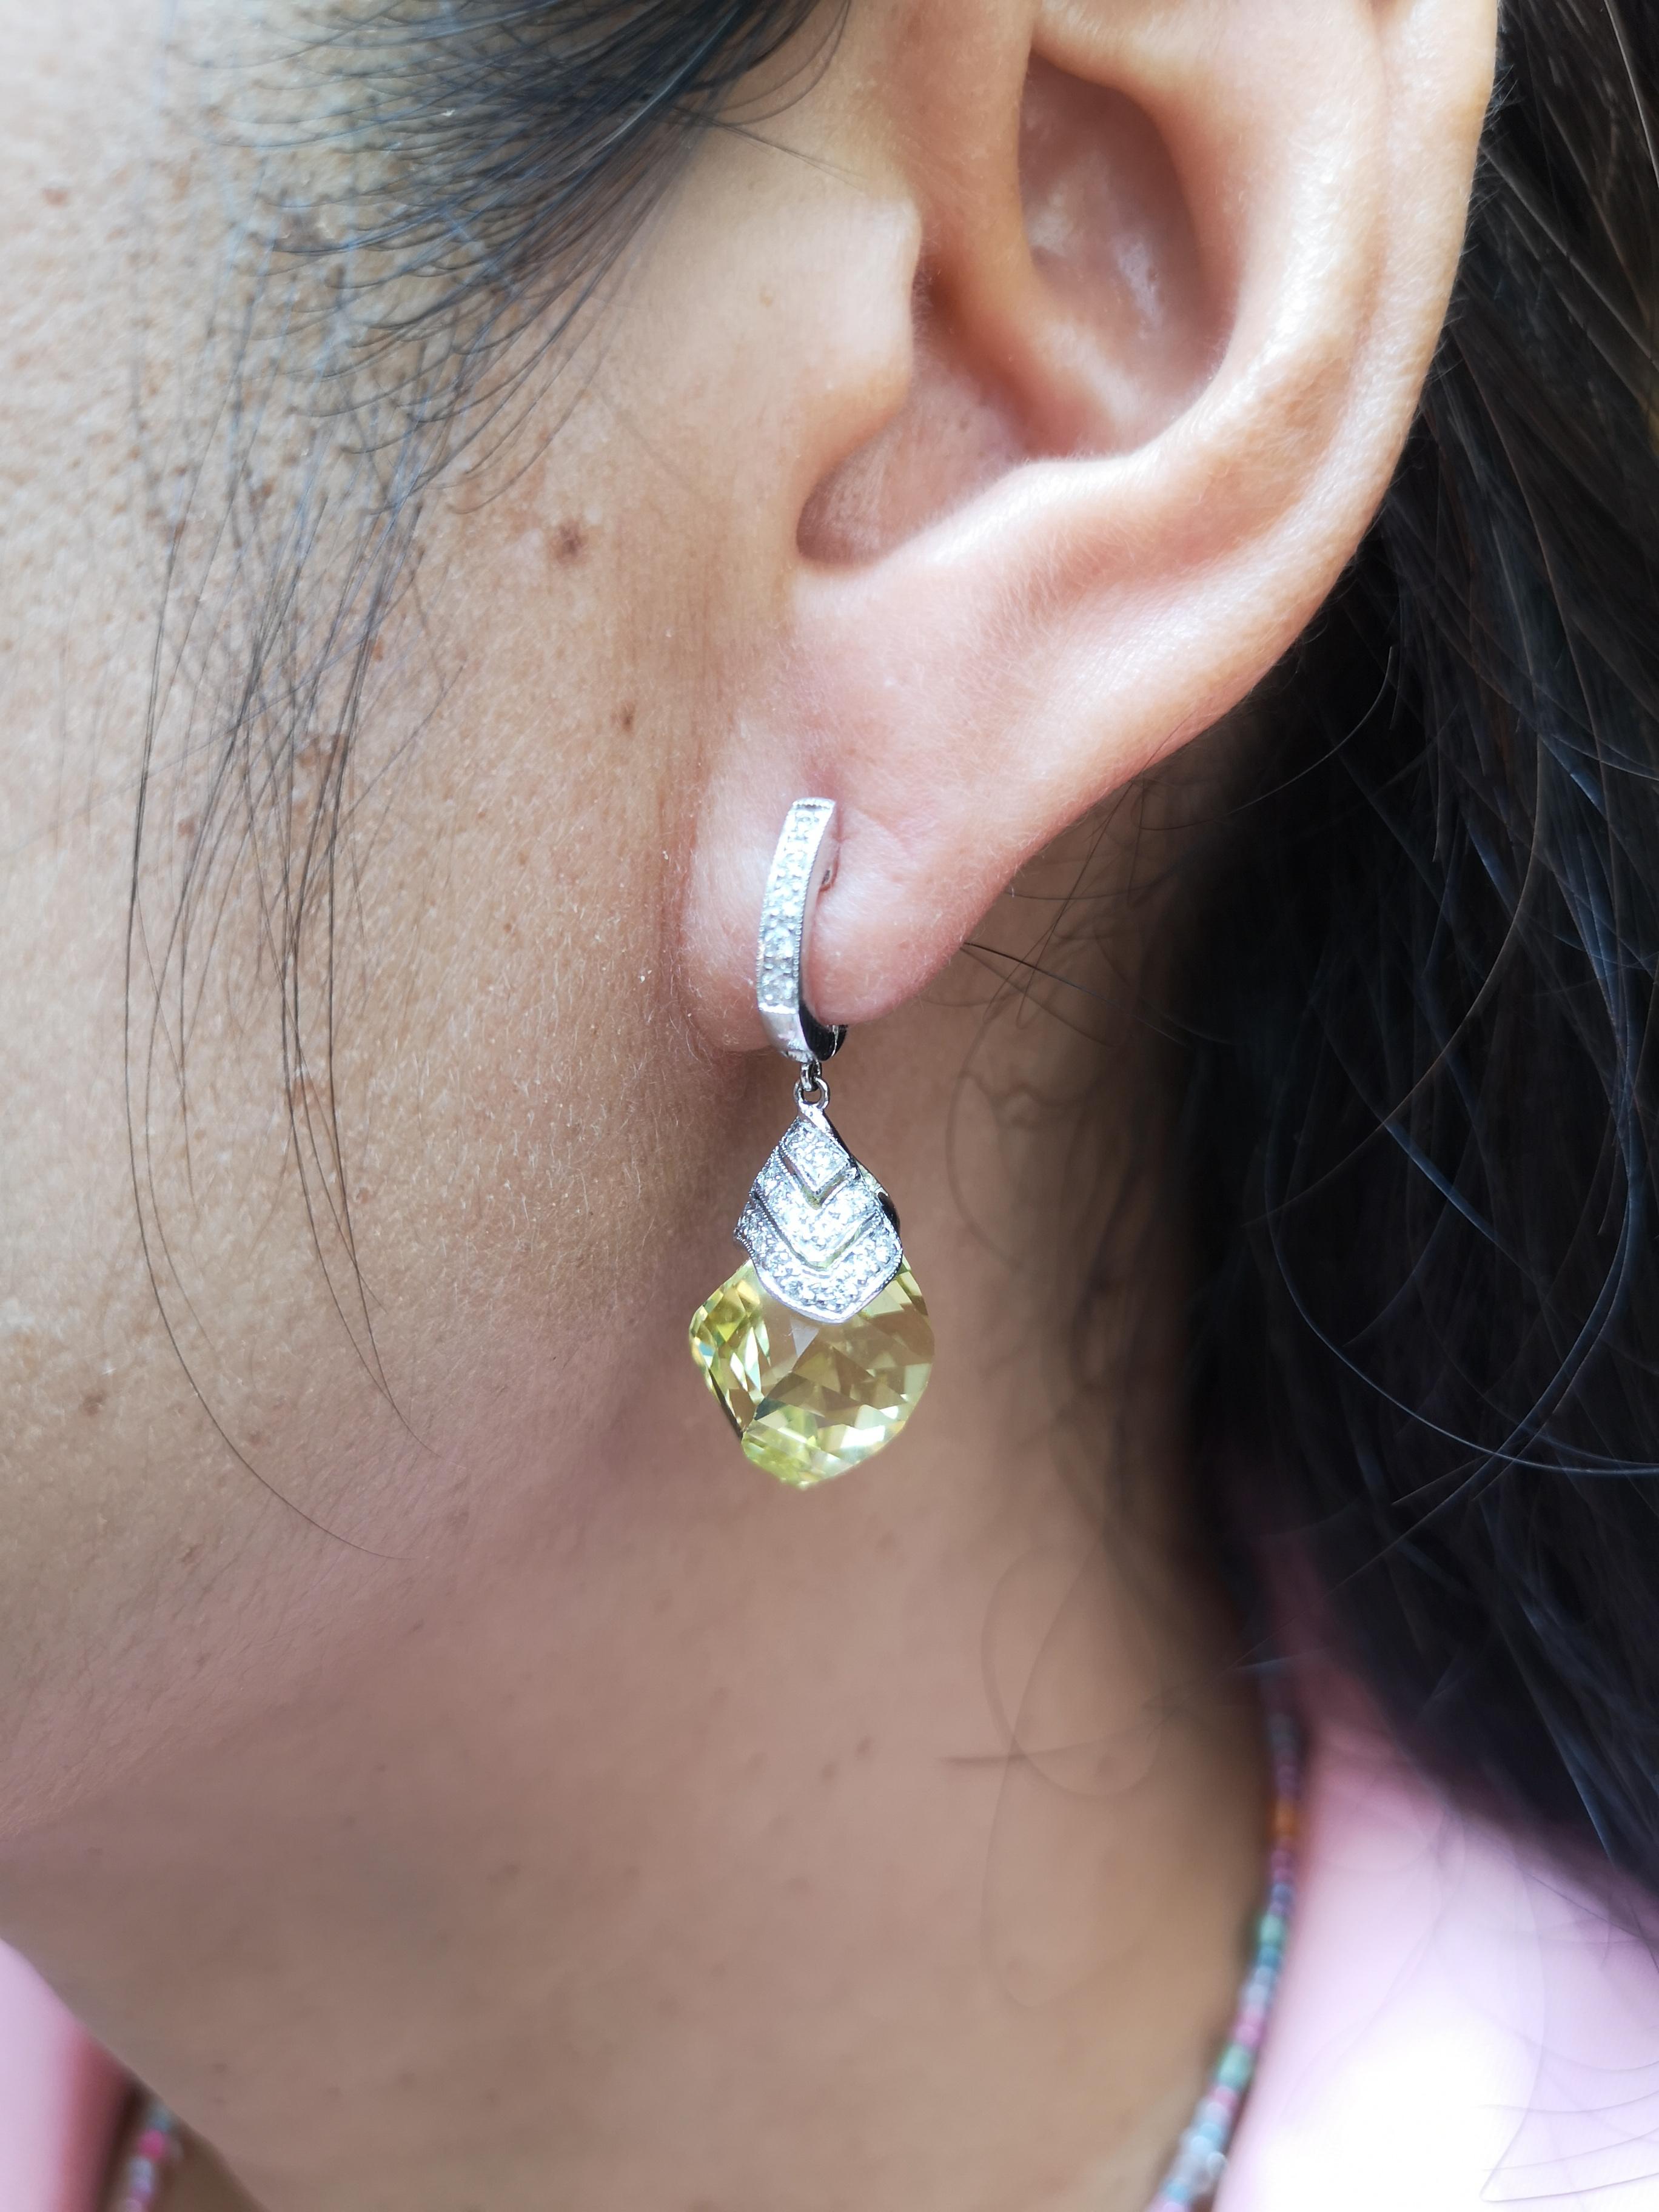 Lemon Quartz 22.17 carats with Diamond 0.35 carat Earrings set in 18 Karat White Gold Settings

Width: 1.3 cm
Length: 3.2 cm 

